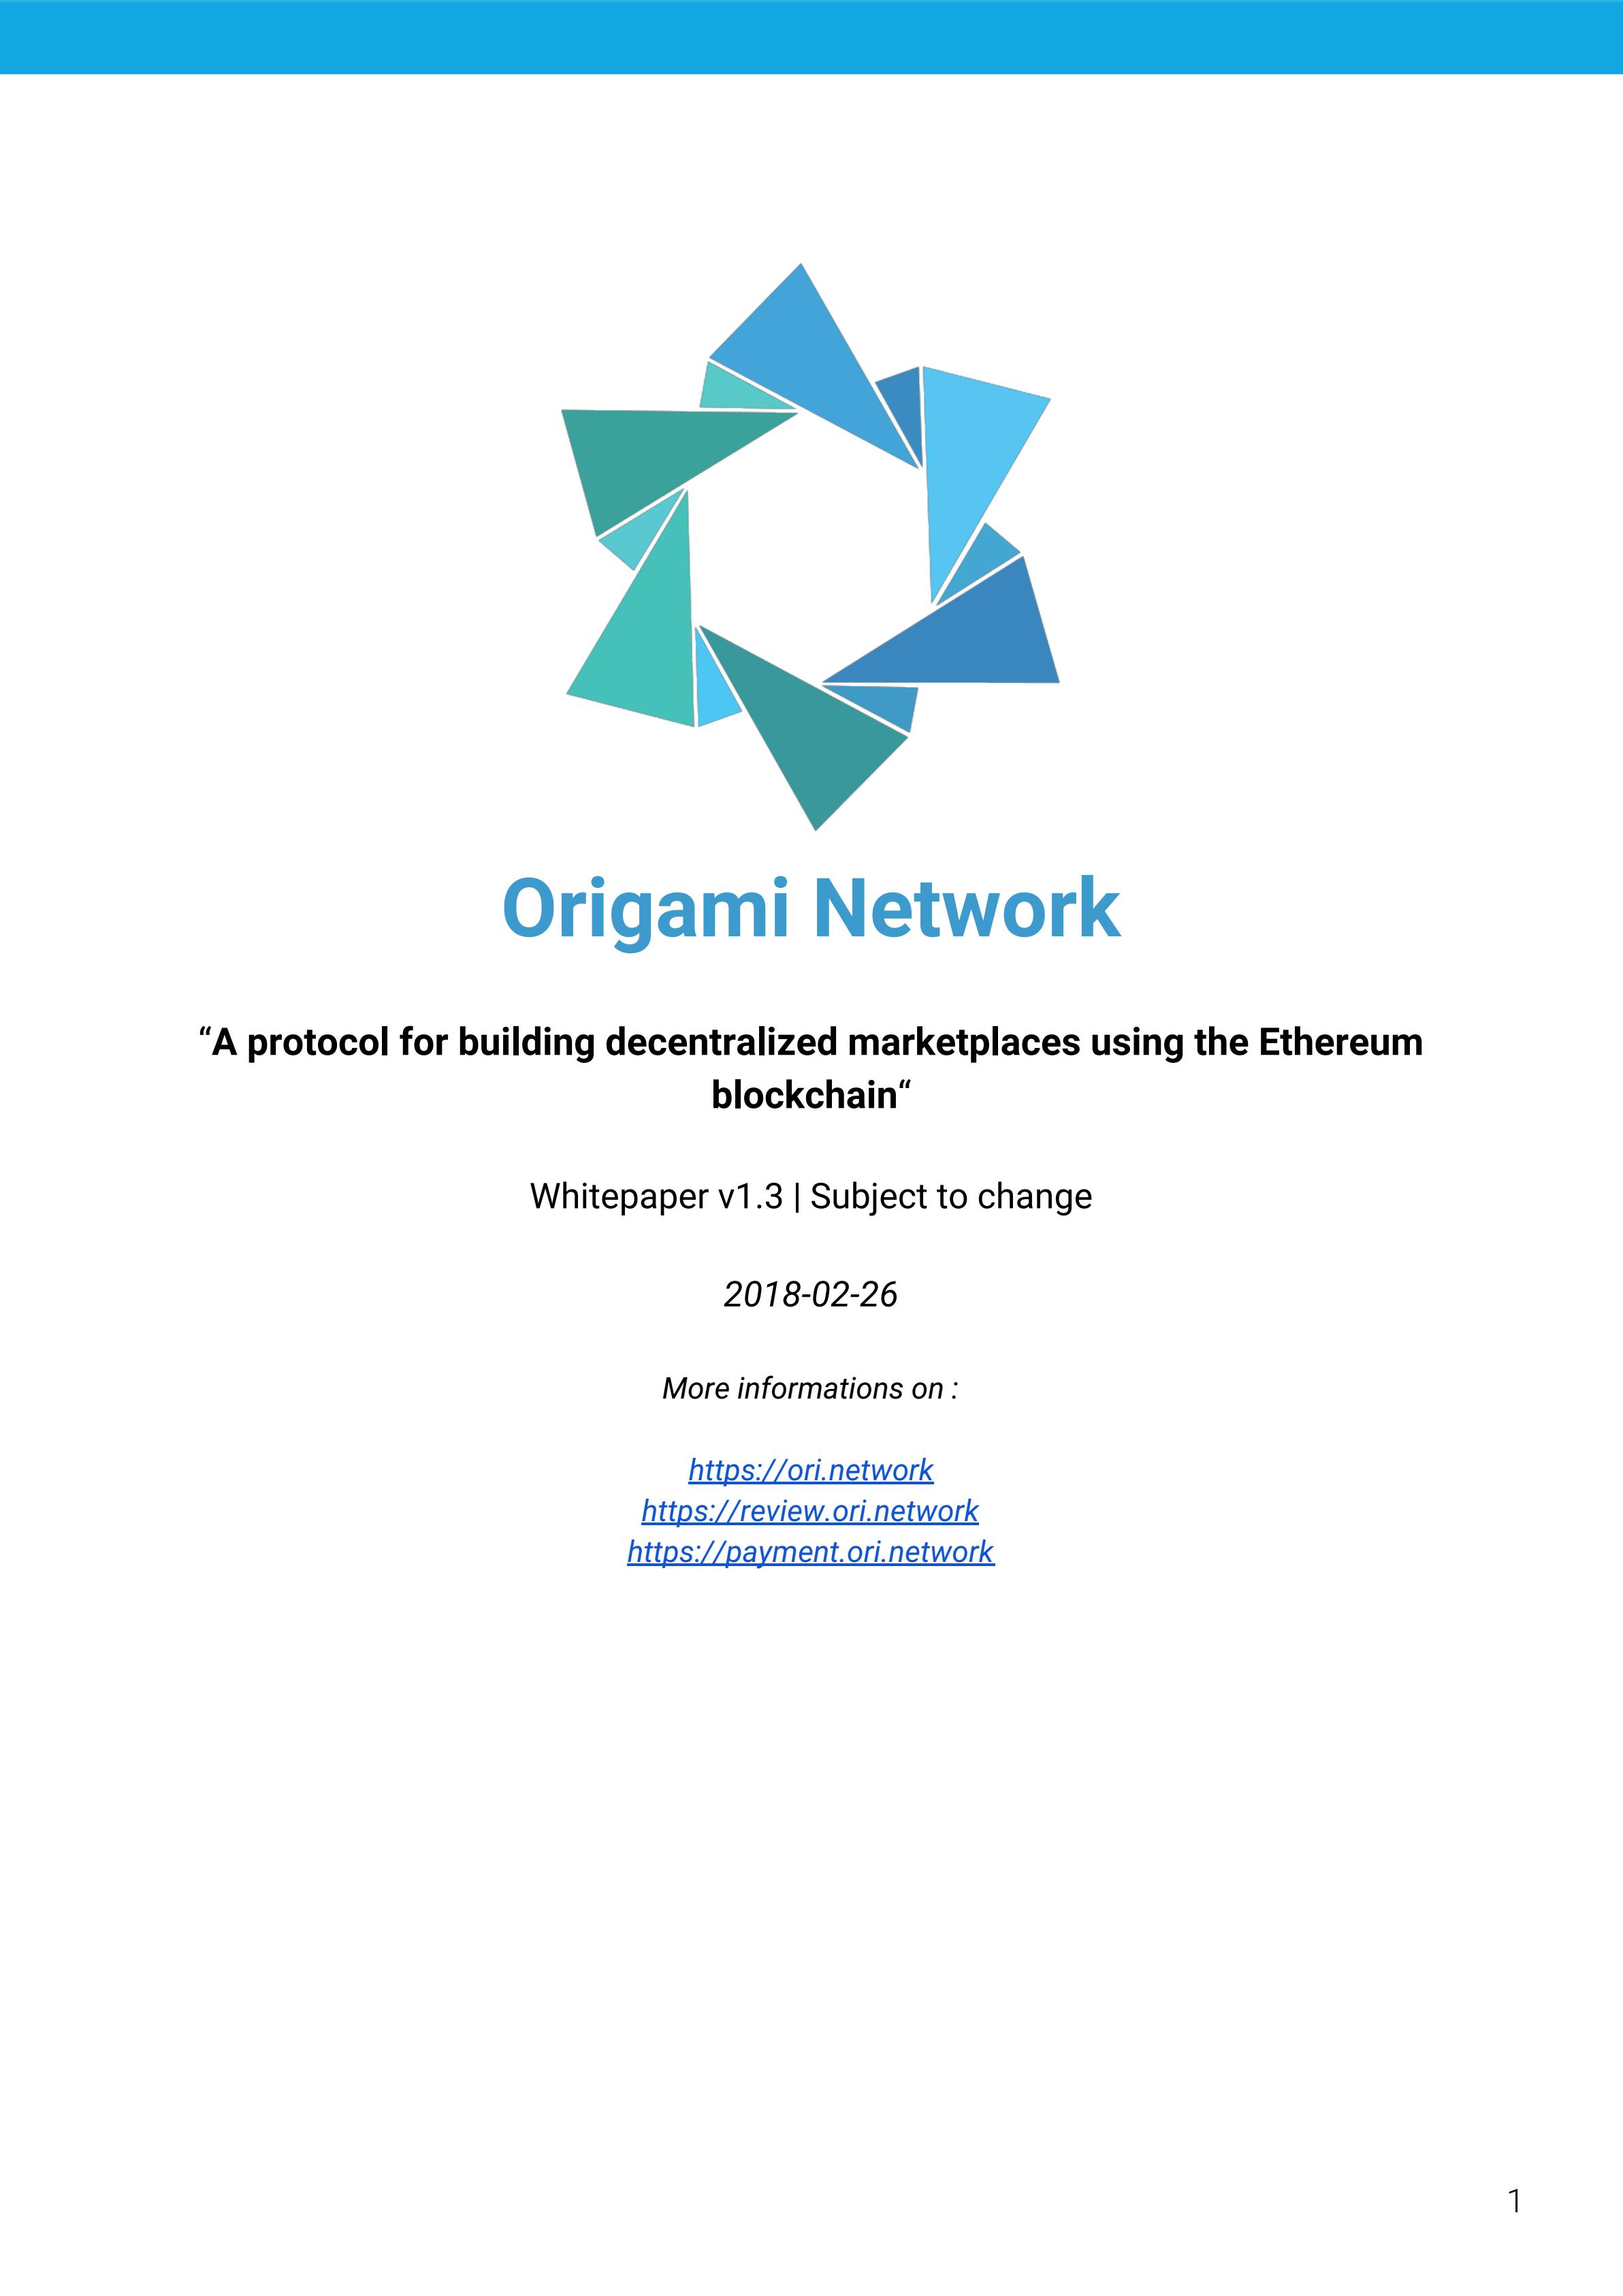 ORI_Origami-Network-Whitepaper-0.1-1_00.jpg